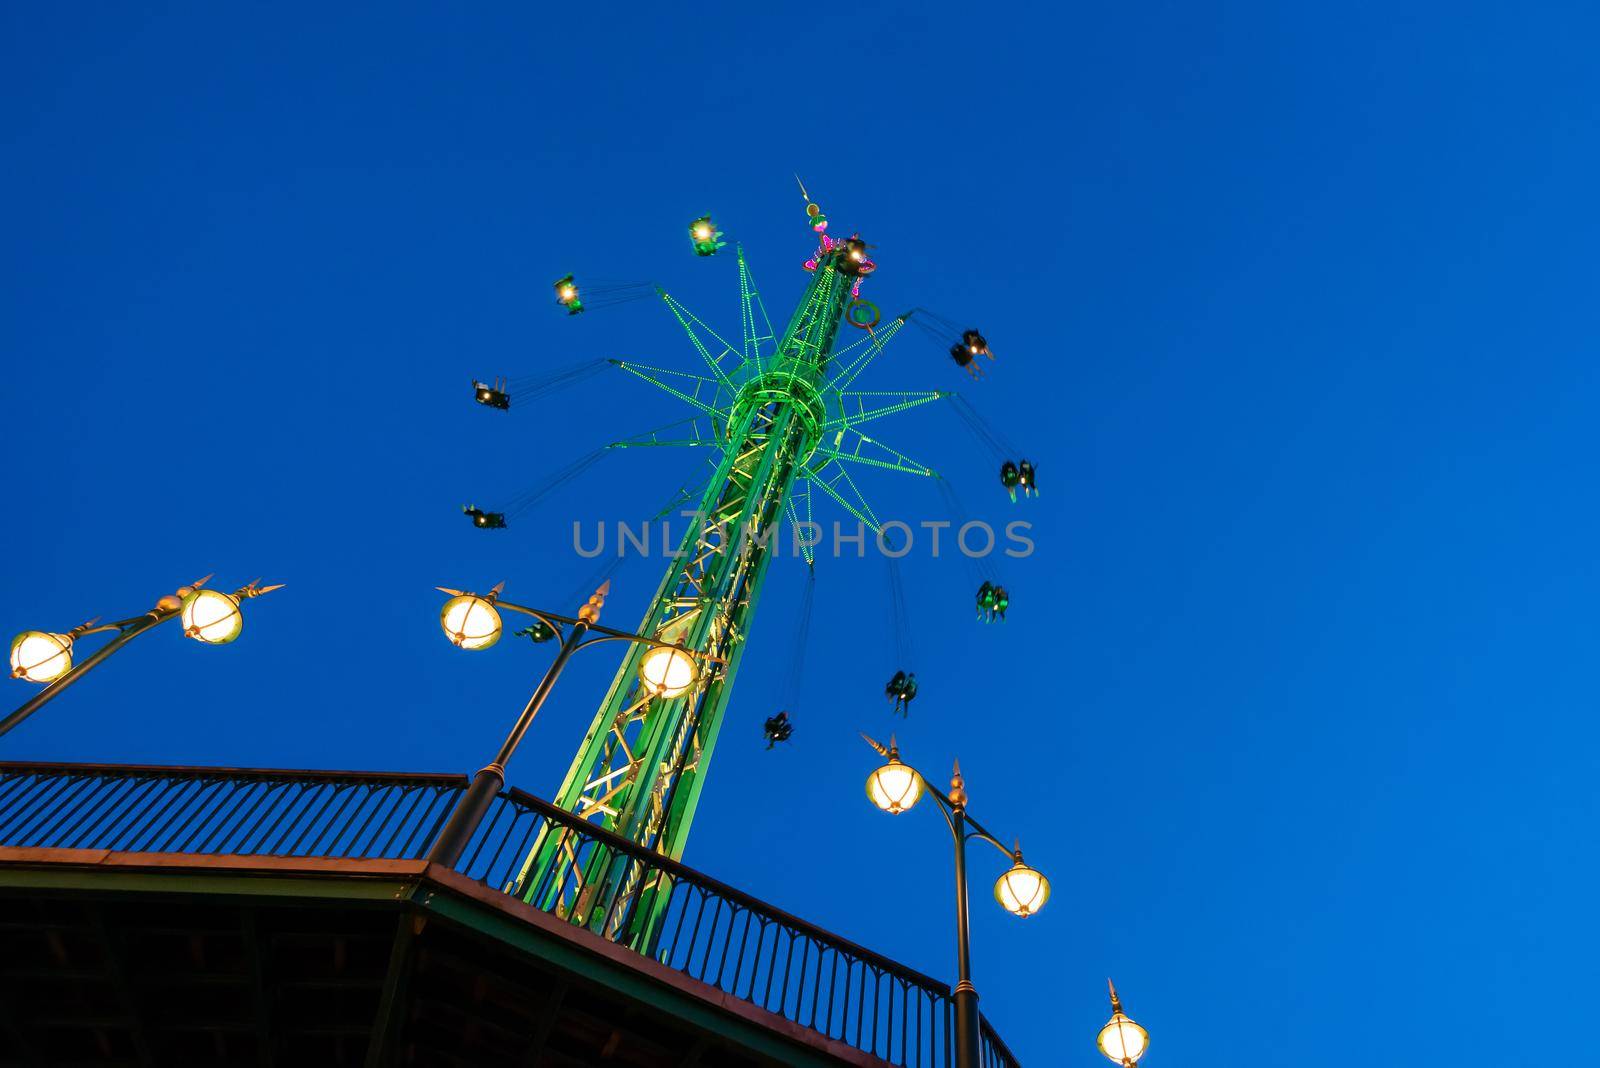 The swing ride or chair swing ride in the Tivoli amusement park at night at Copenhagen Denmark by Nuamfolio